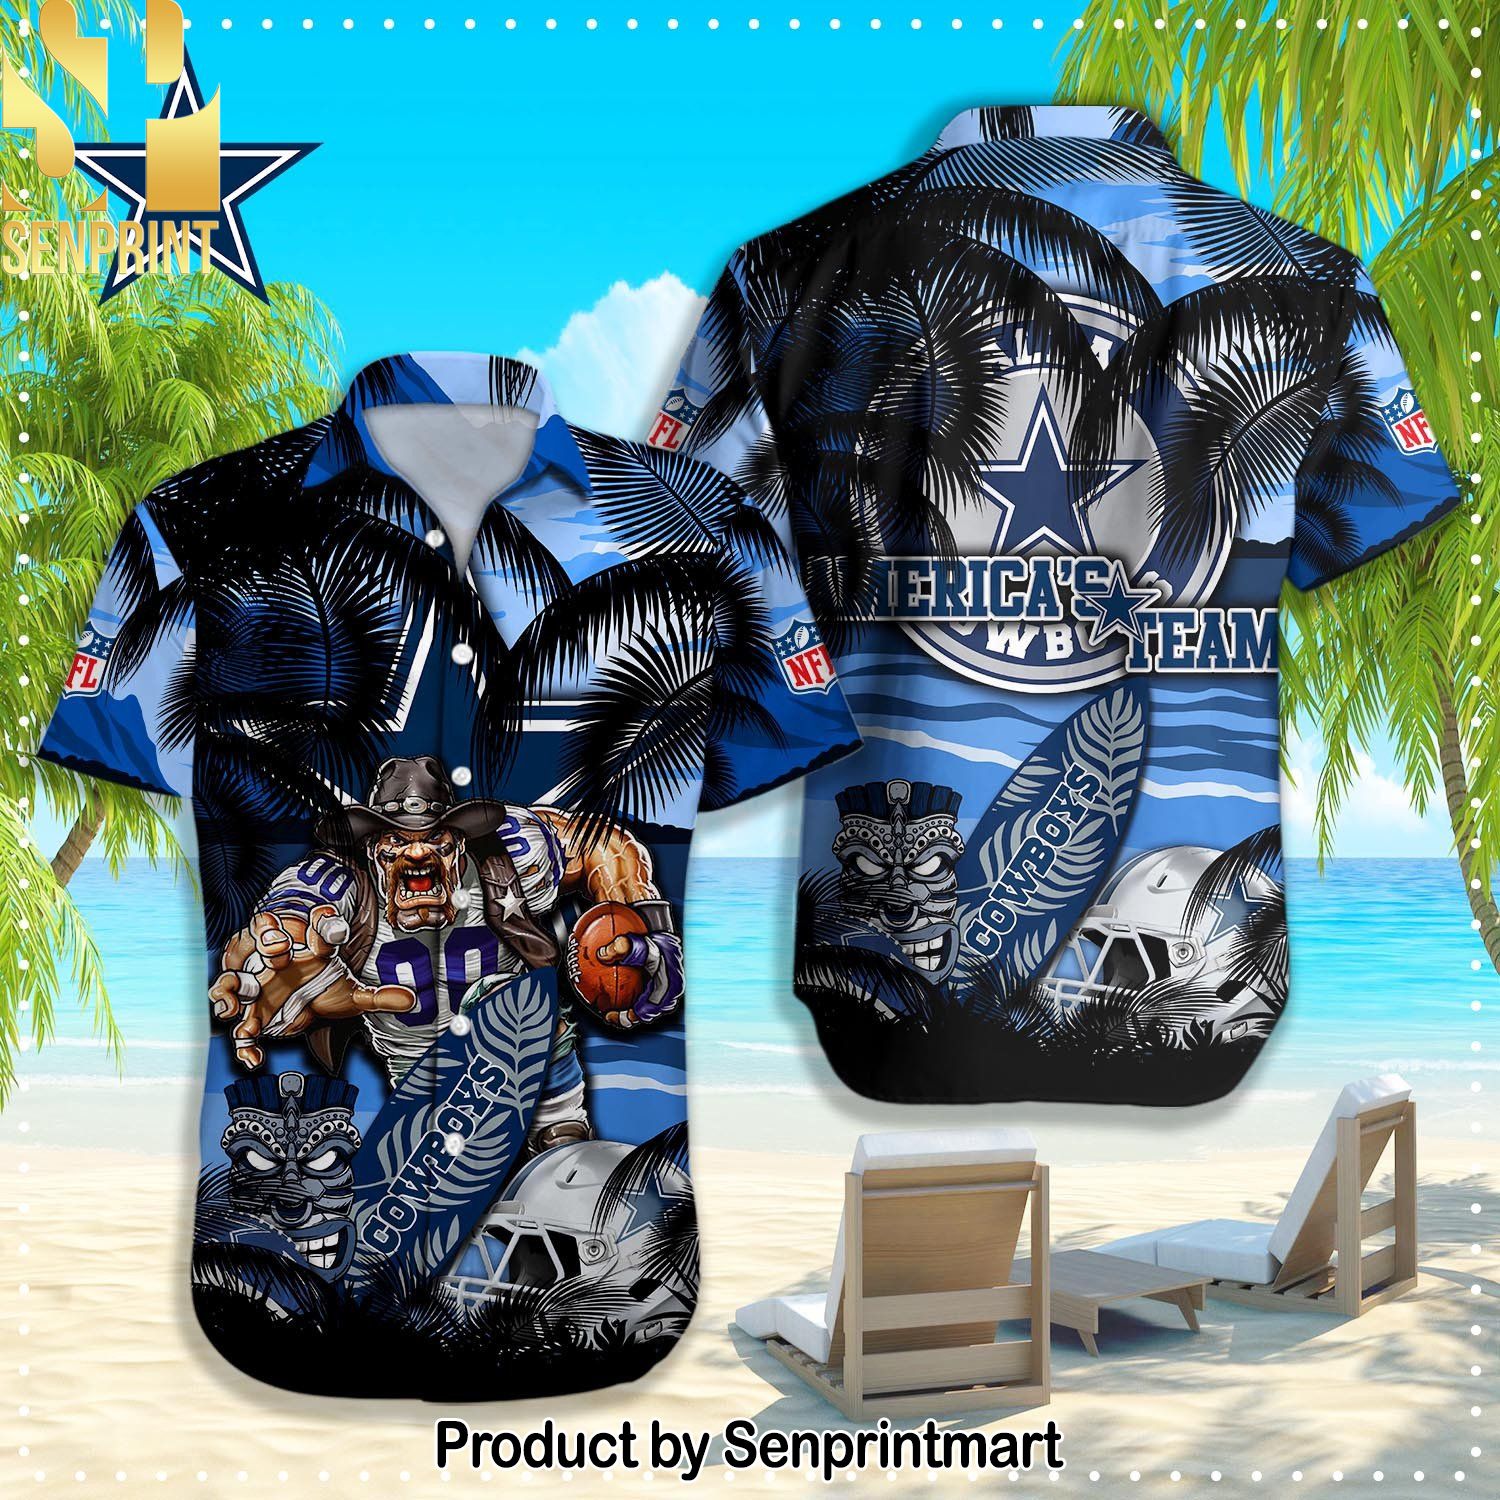 Dallas Cowboys NFL Street Style All Over Print Hawaiian Shirt and Shorts